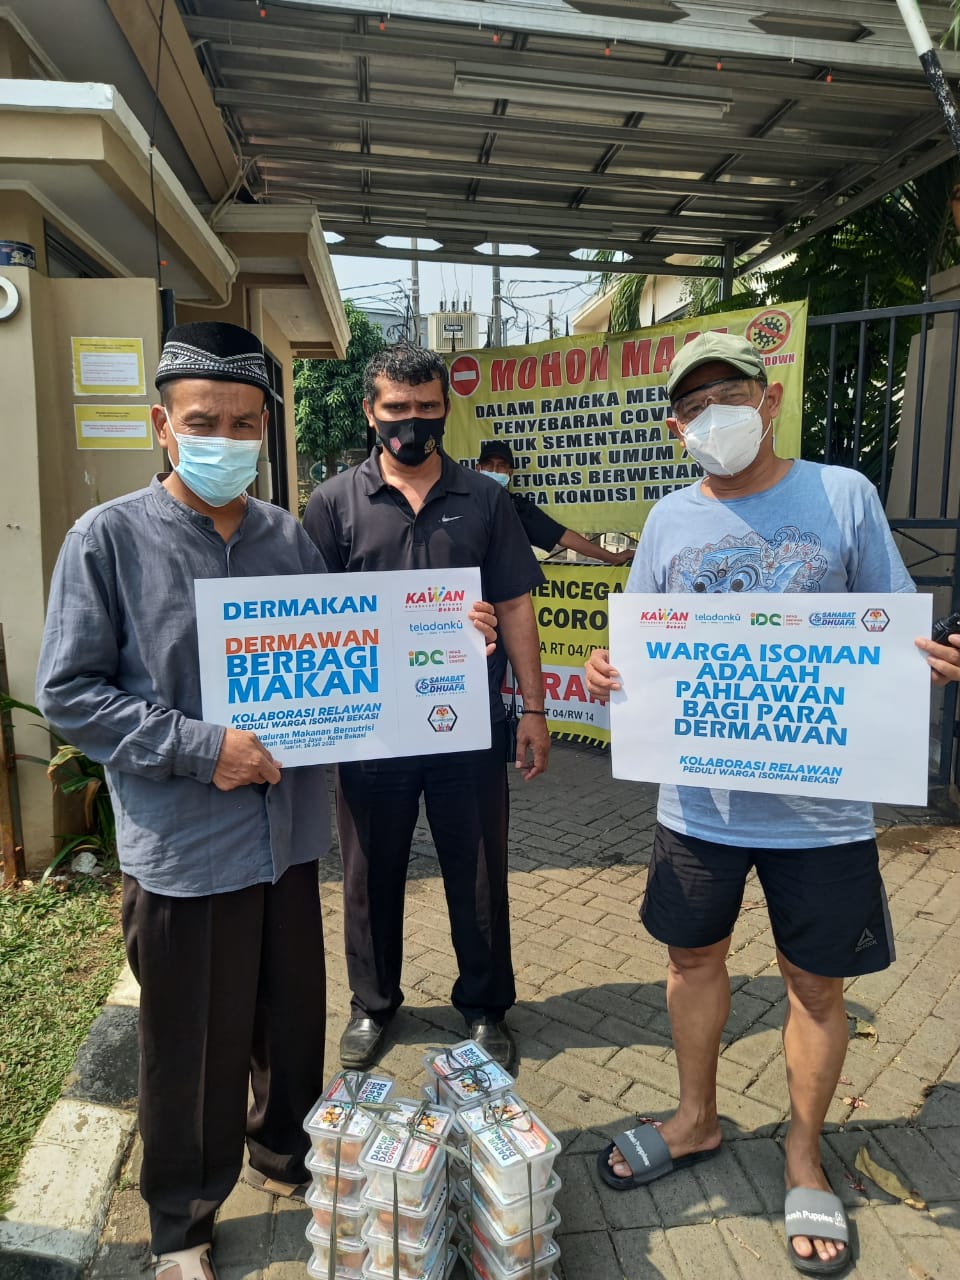 Kolaborasi Relawan Salurkan Ratusan Nasi Kotak untuk Warga Isoman di Bekasi